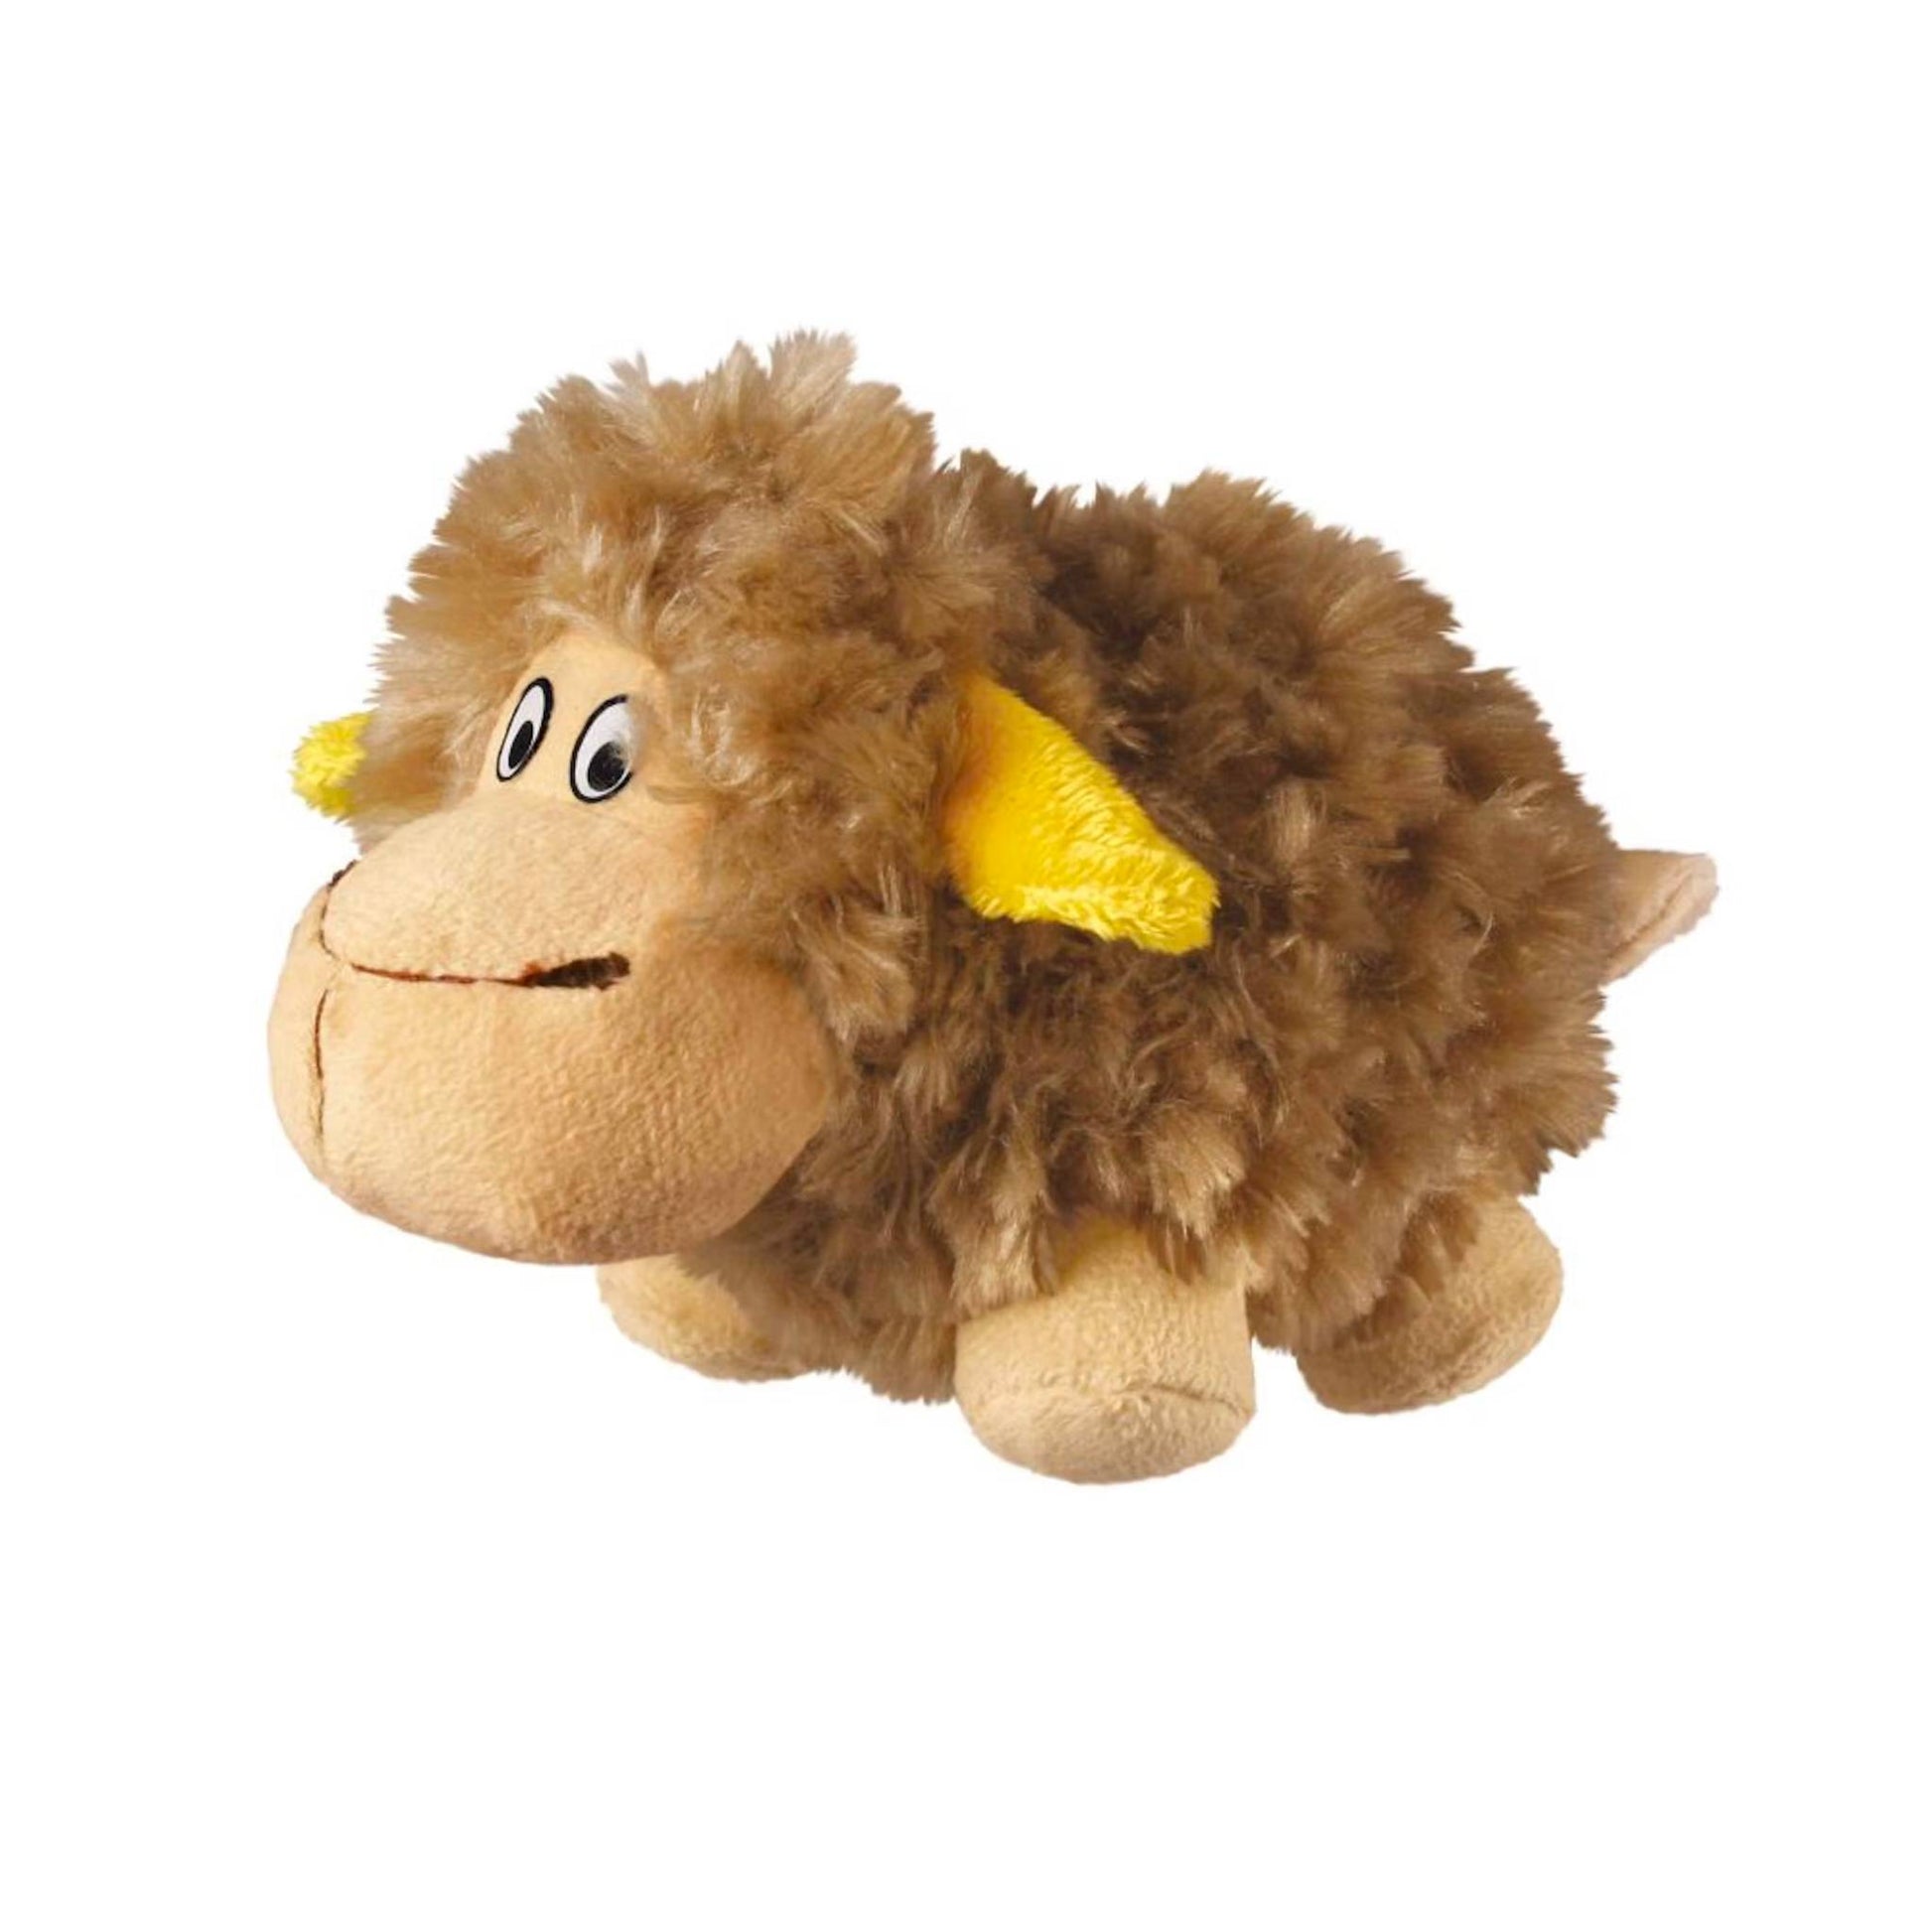 KONG Cruncheez Barnyard Sheep Dog Toy